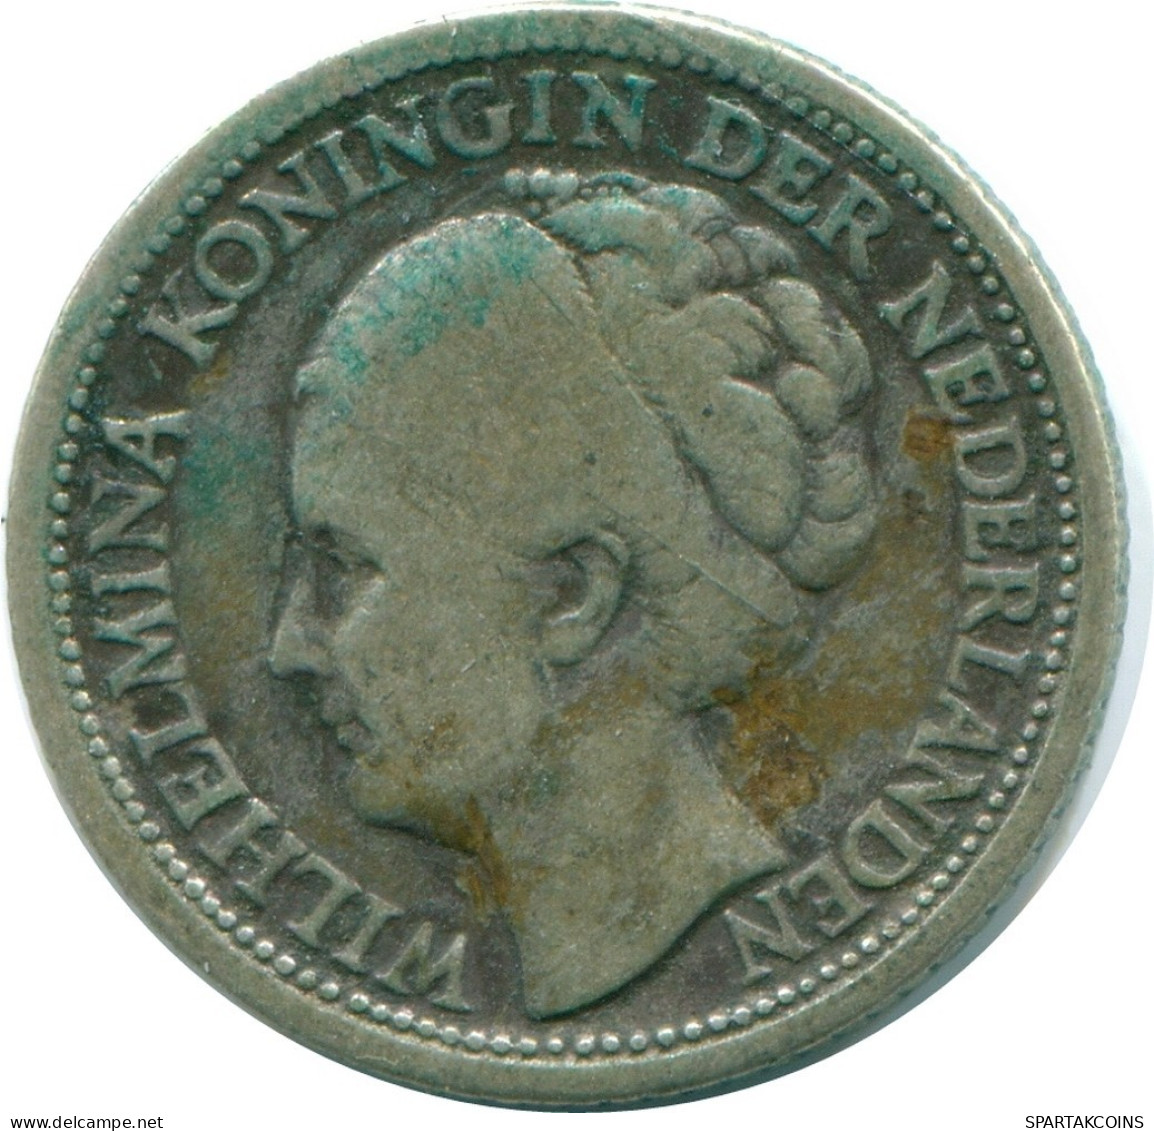 1/4 GULDEN 1944 CURACAO Netherlands SILVER Colonial Coin #NL10632.4.U.A - Curaçao